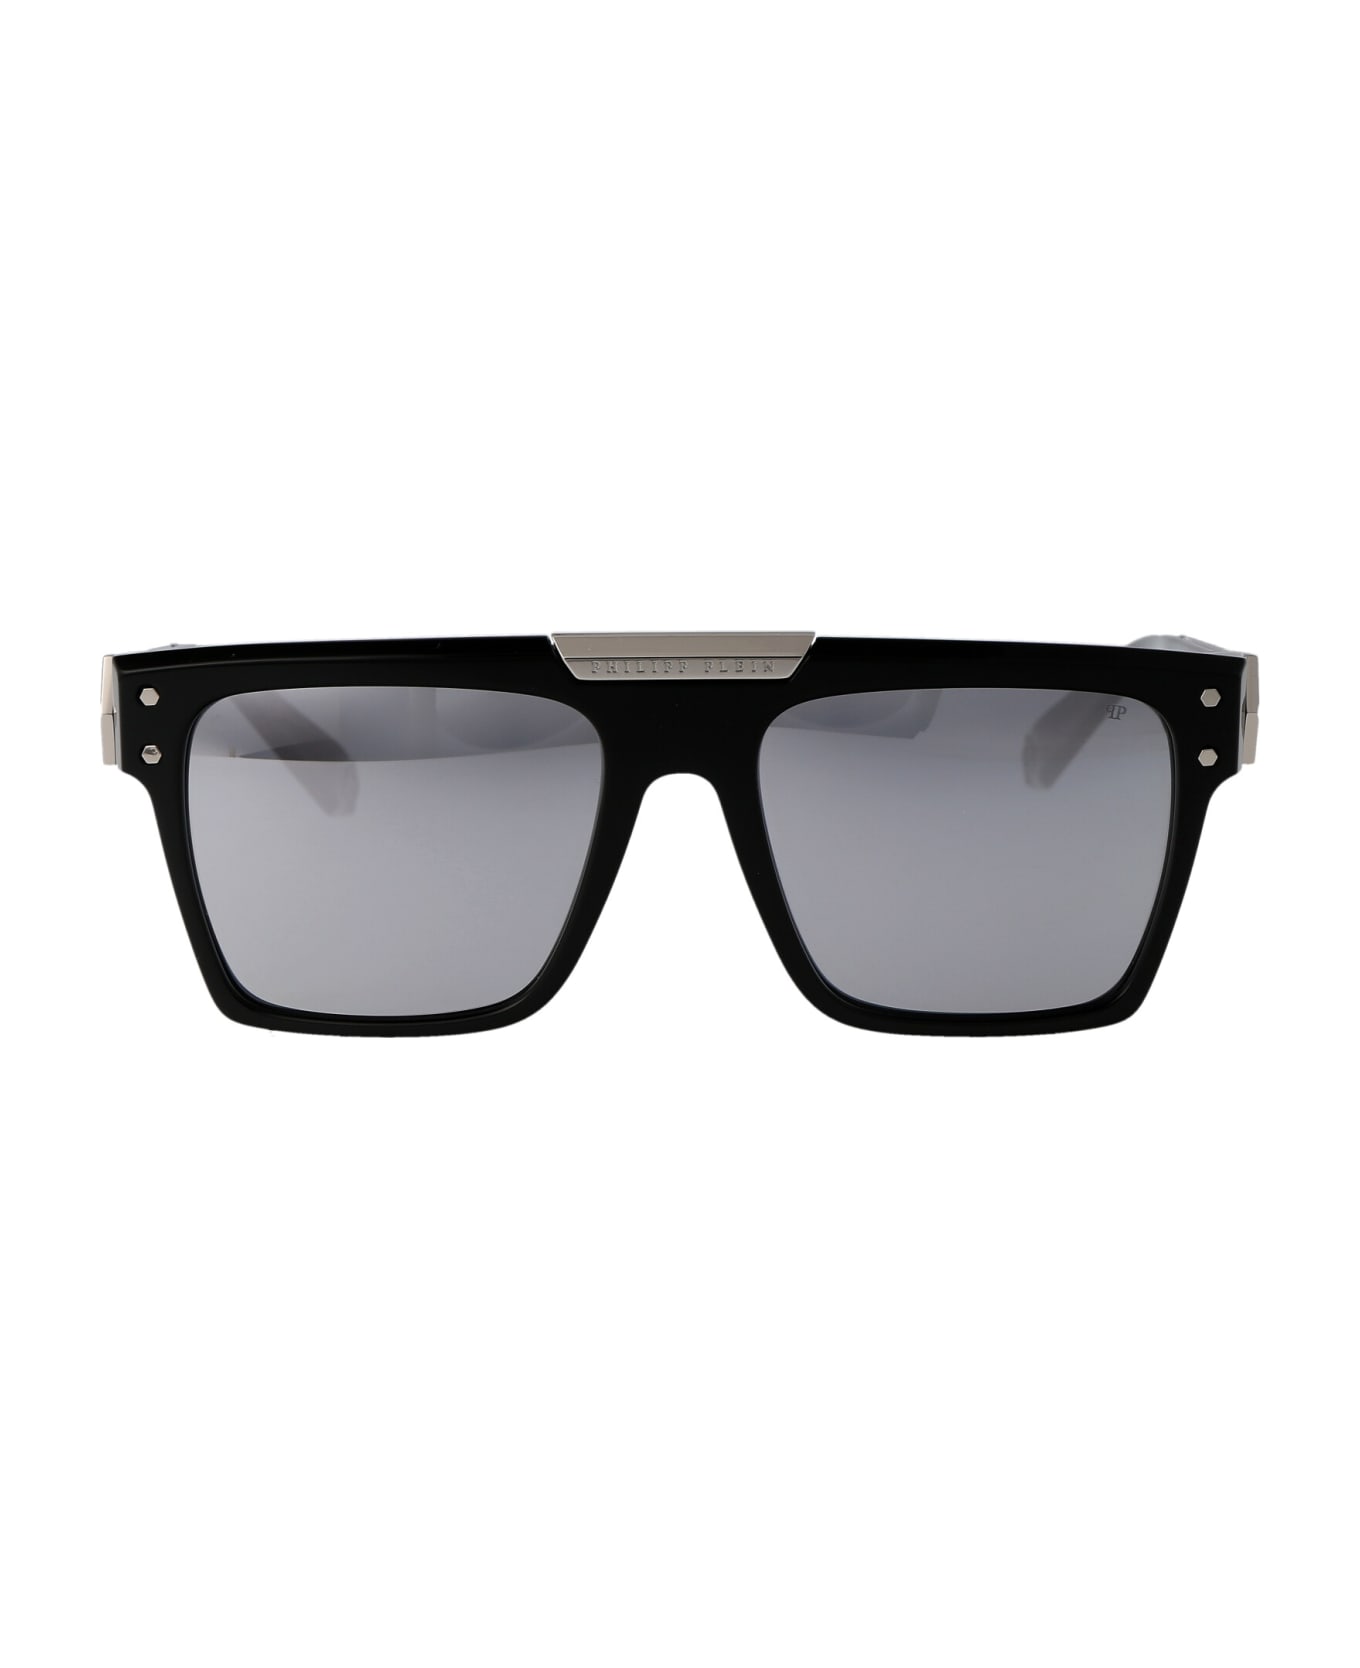 Philipp Plein Spp080 Sunglasses - 700W BLACK